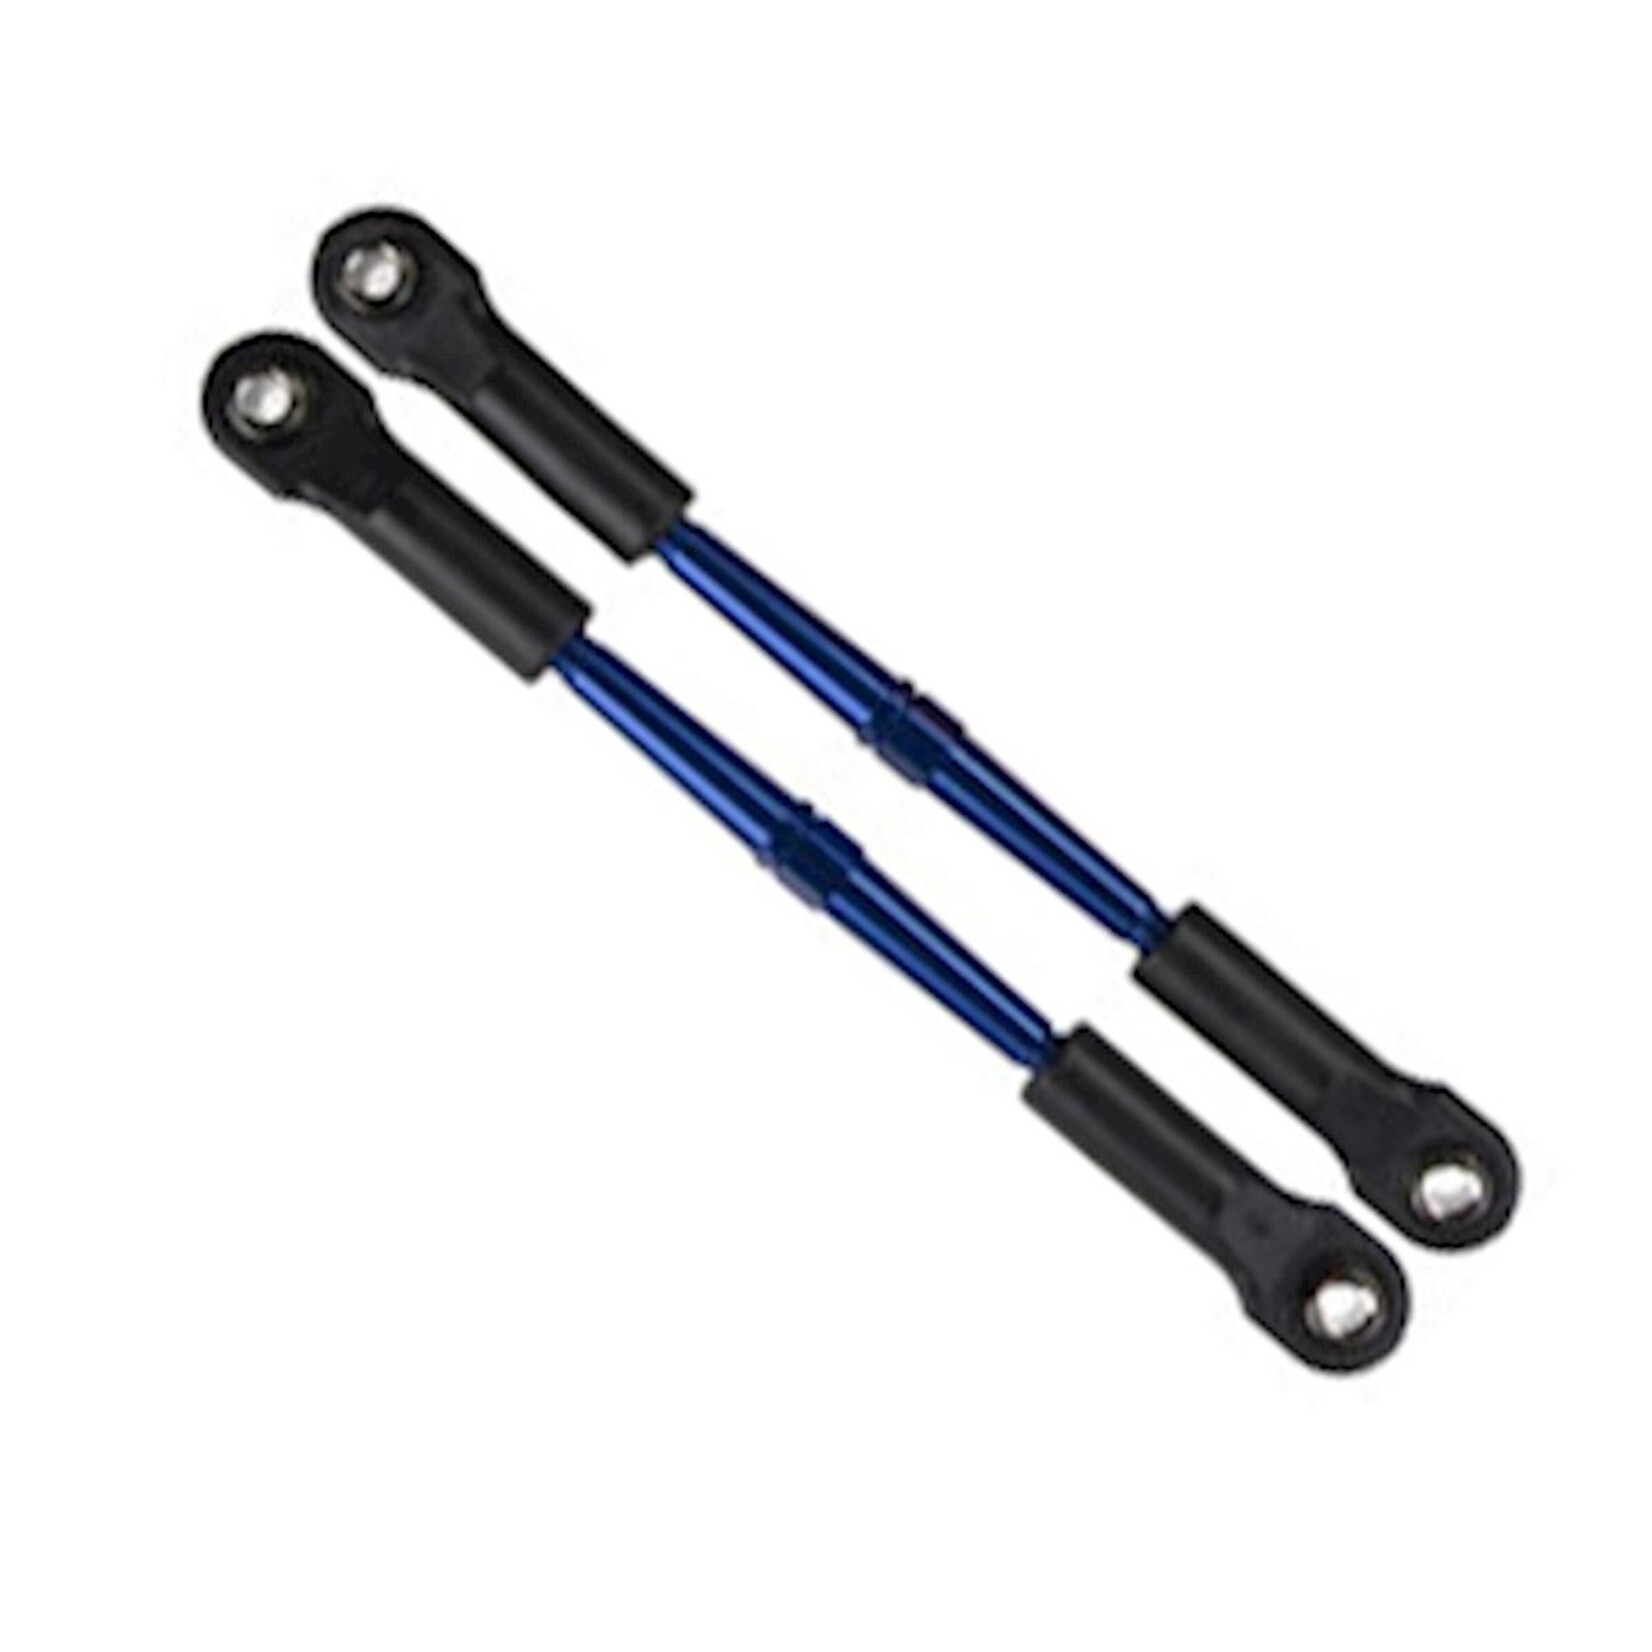 Traxxas Traxxas 61mm Aluminum Toe Link Turnbuckle Set (Blue) (2) #2336A